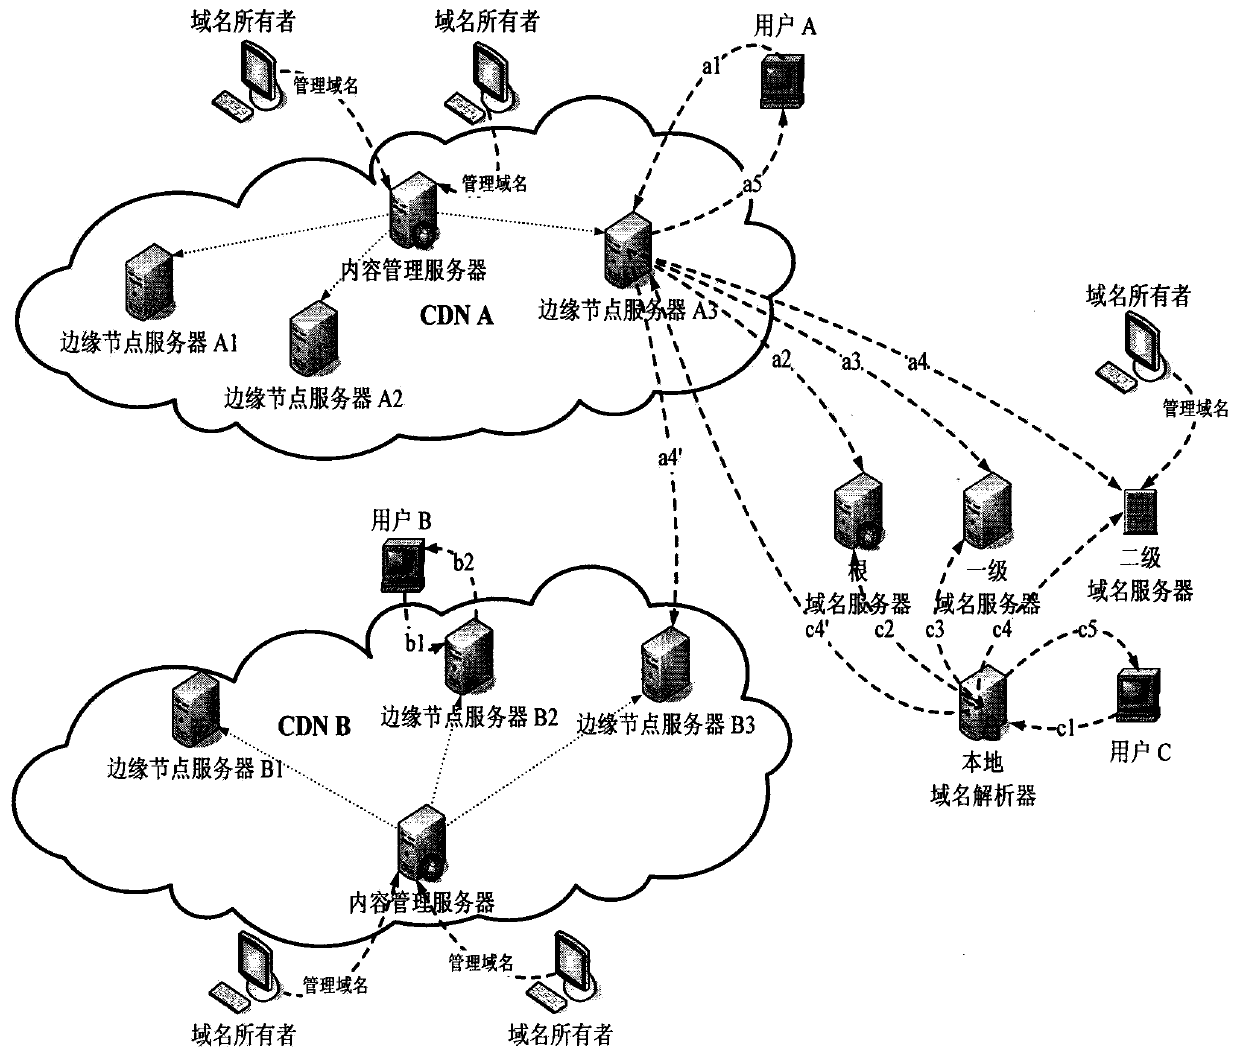 CDN-based domain name parse service model